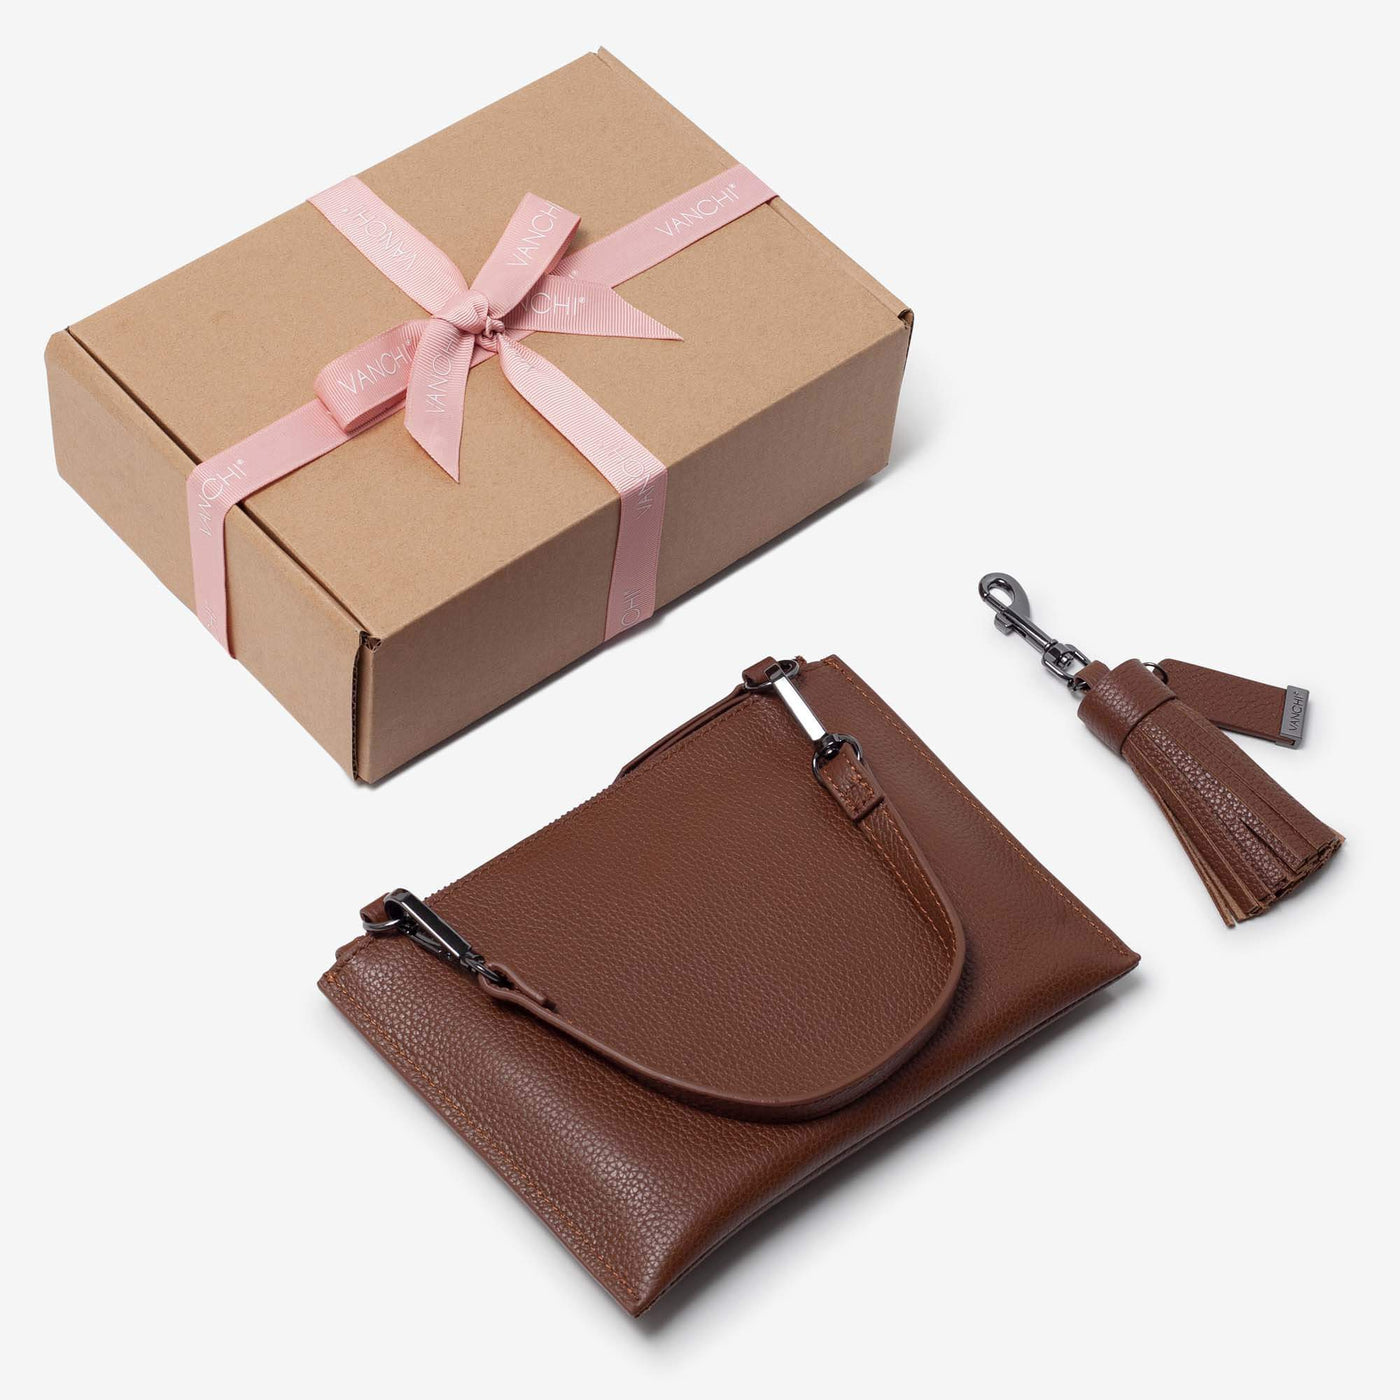 Leather Mini Clutch + Leather Key Ring/ Bag Tassel Gift Set – Tan